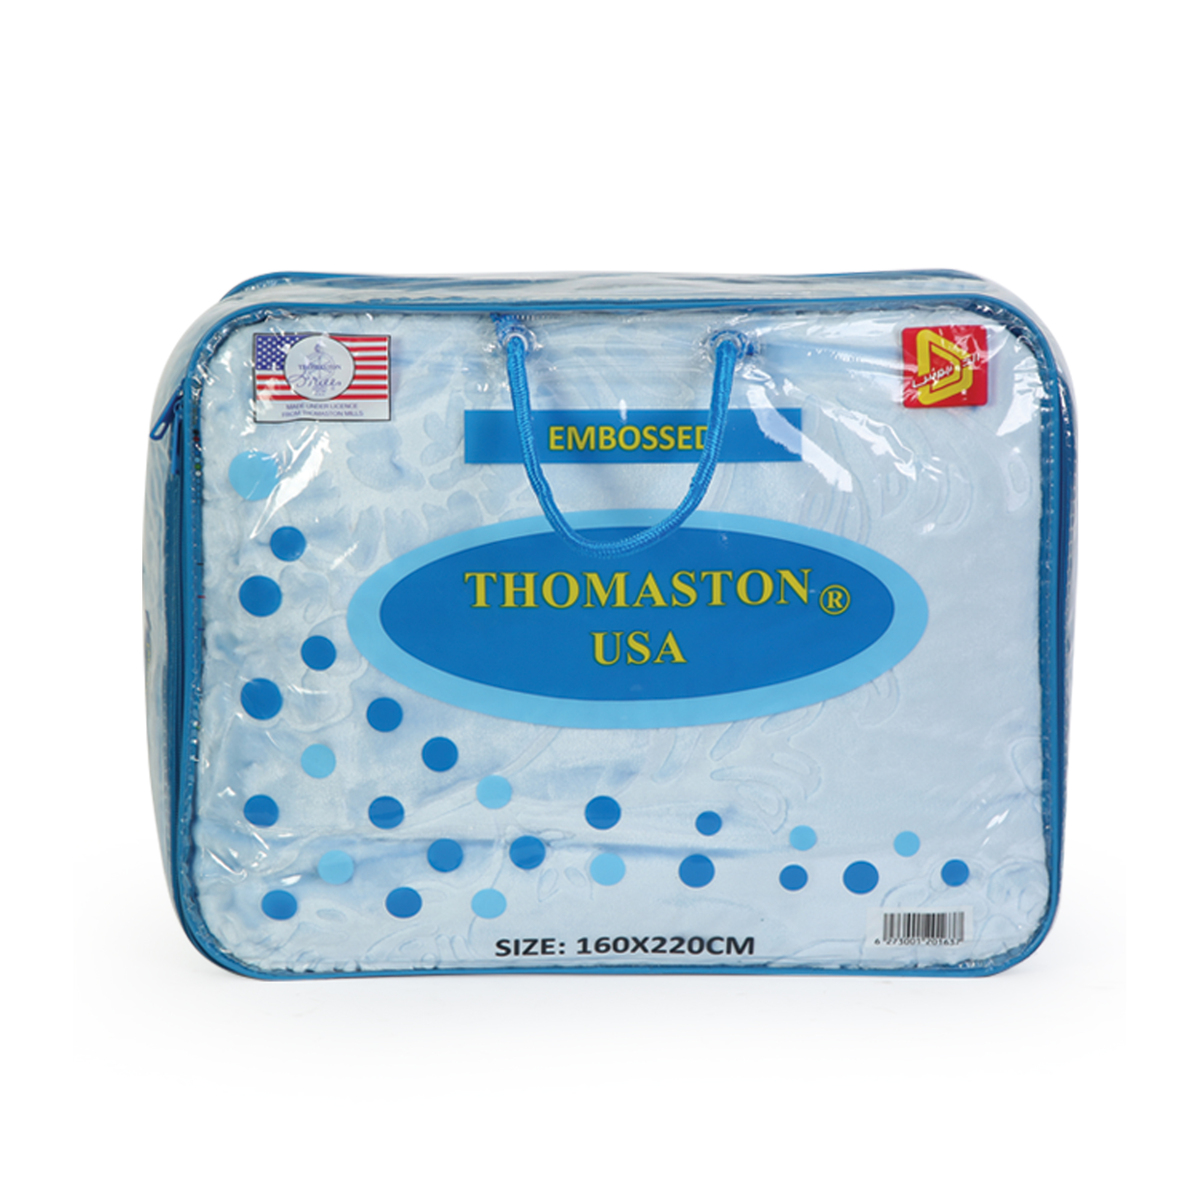 Thomaston Blanket 160x220cm 2Play Assorted Colors & Designs